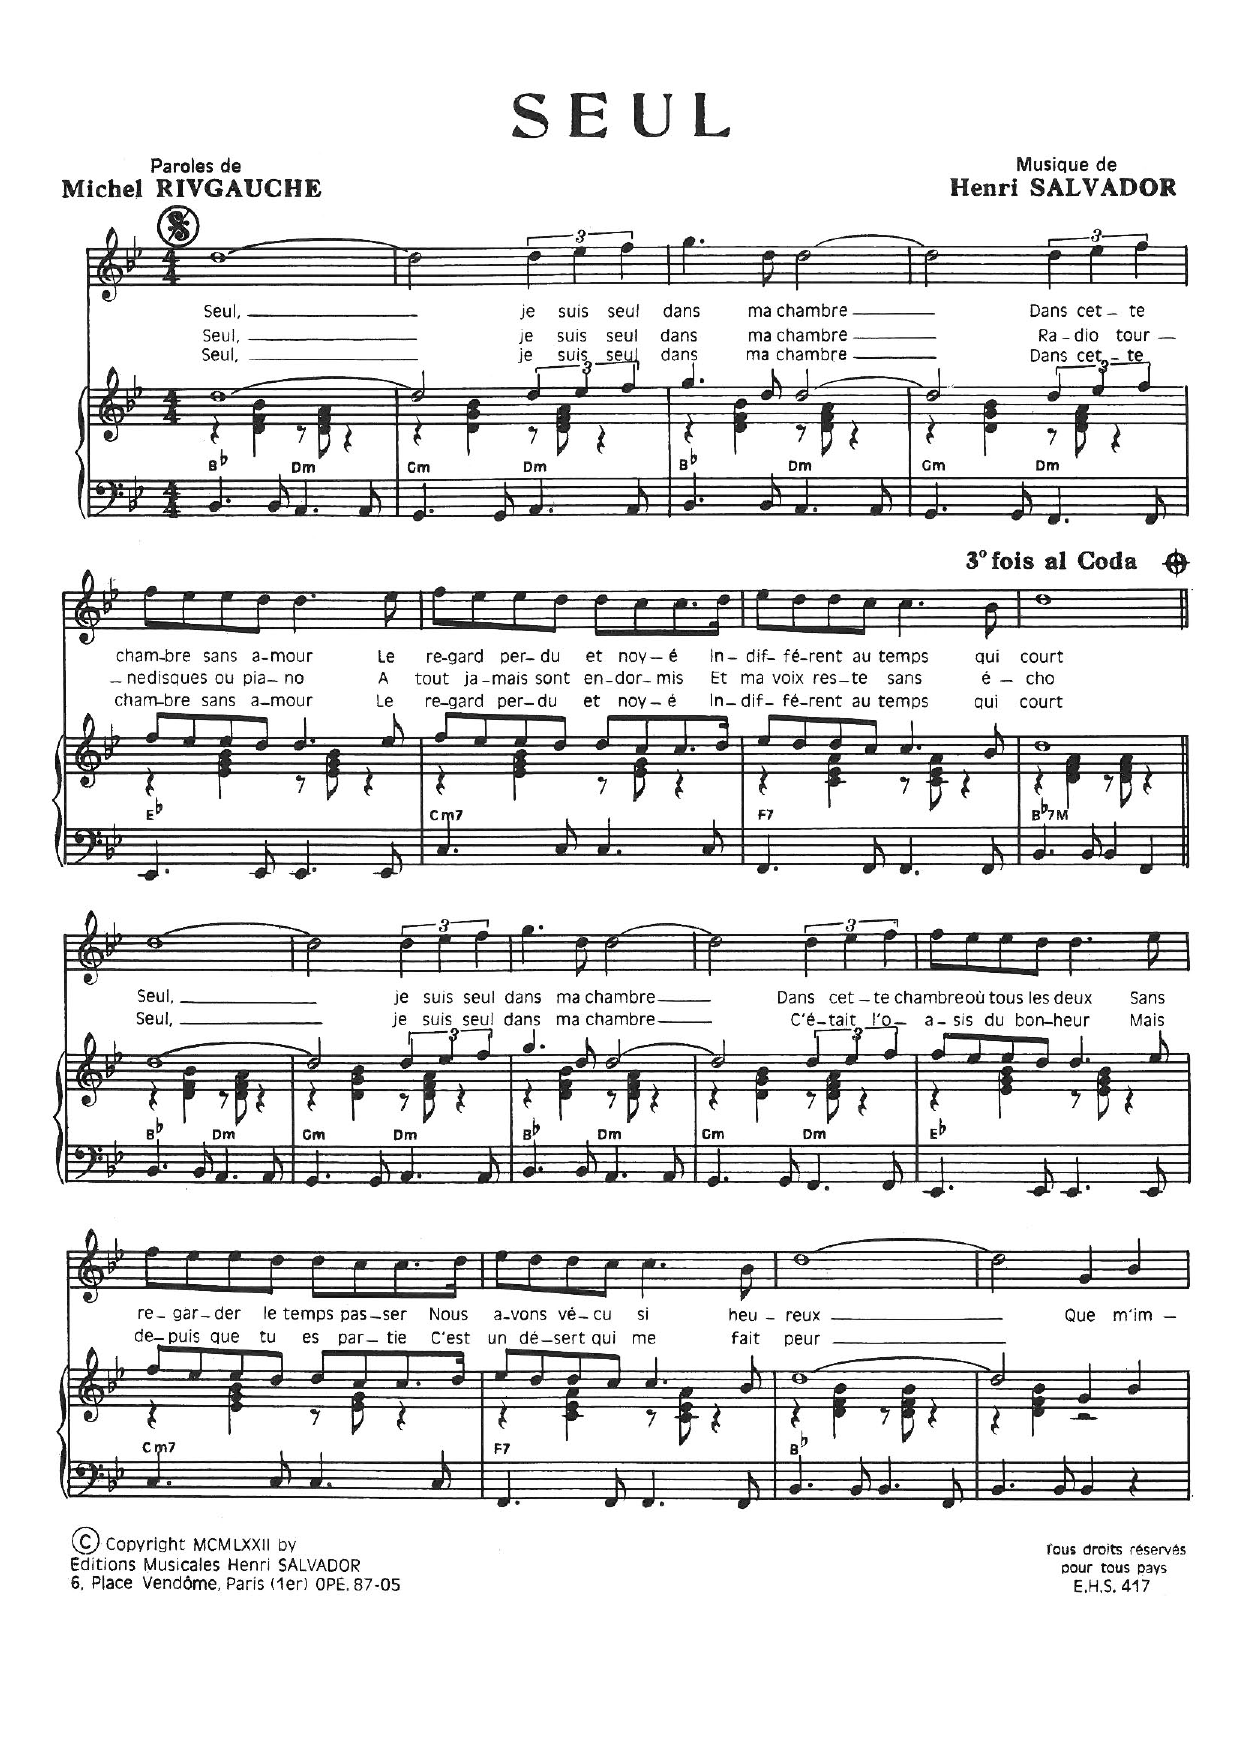 Henri Salvador Seul Sheet Music Notes & Chords for Piano & Vocal - Download or Print PDF